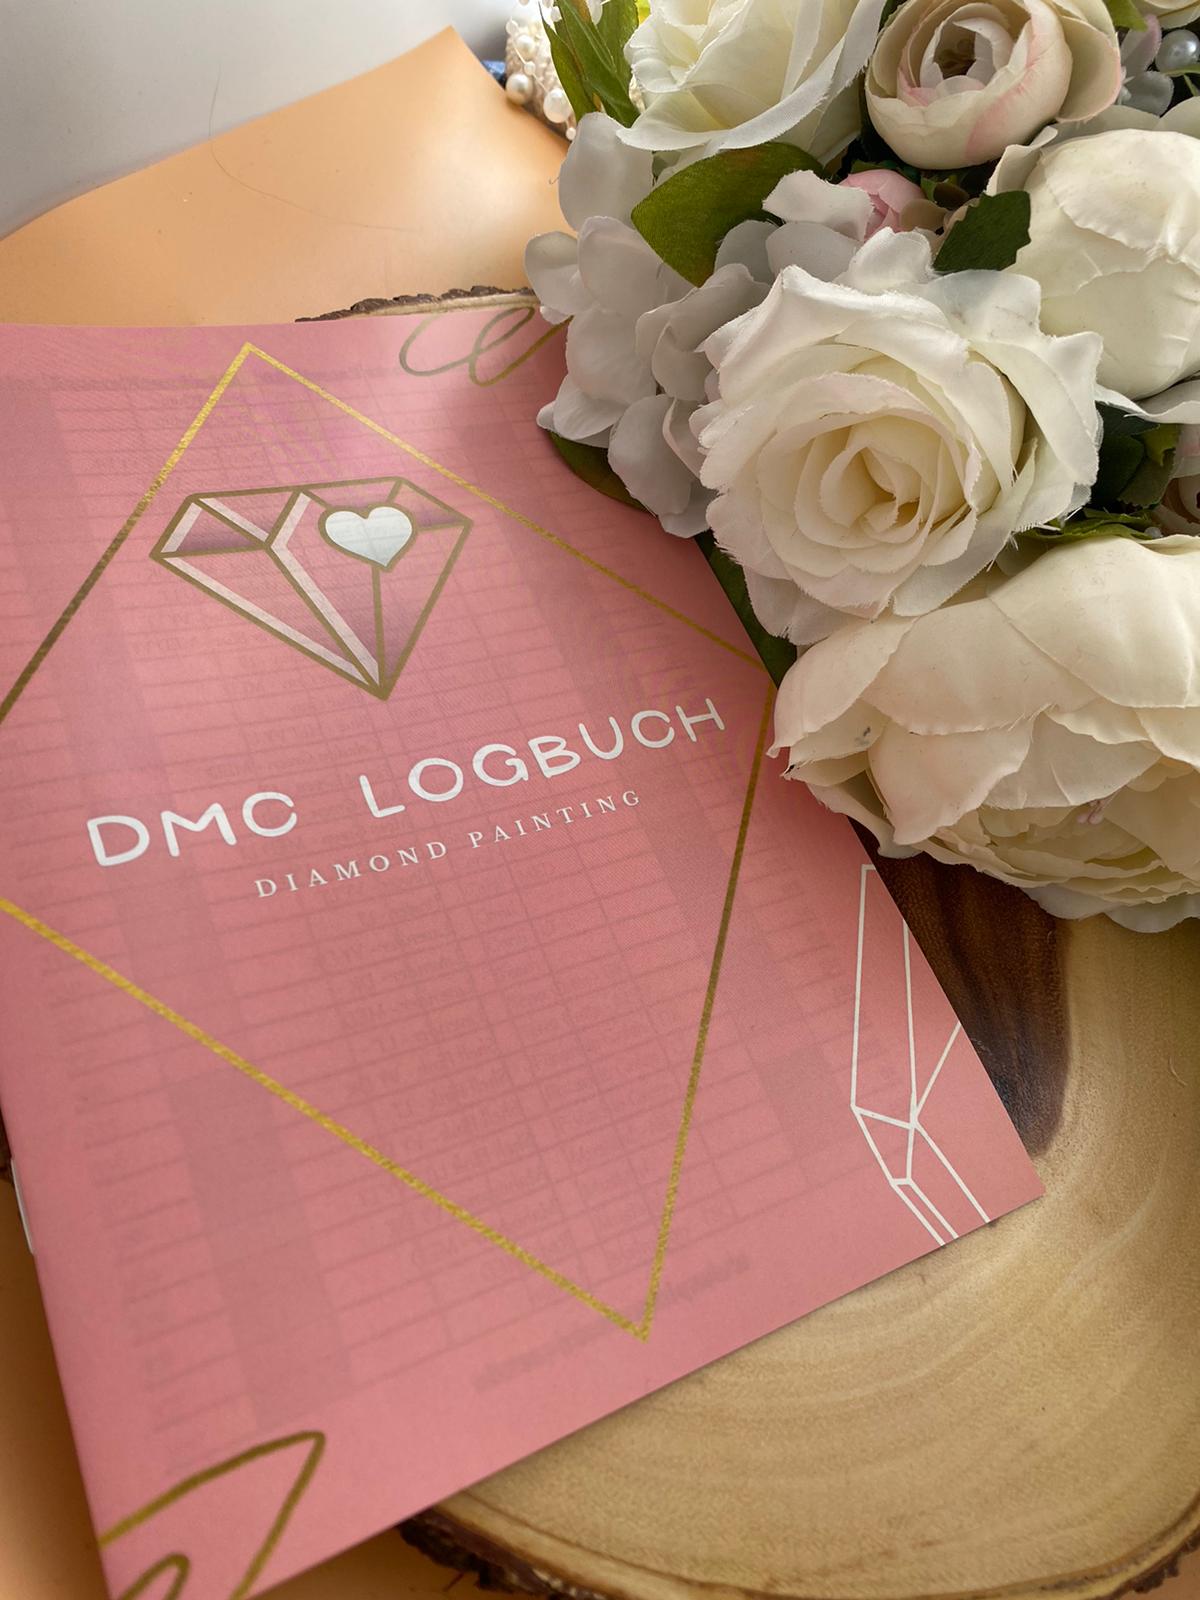 Diamond Painting DMC Logbuch